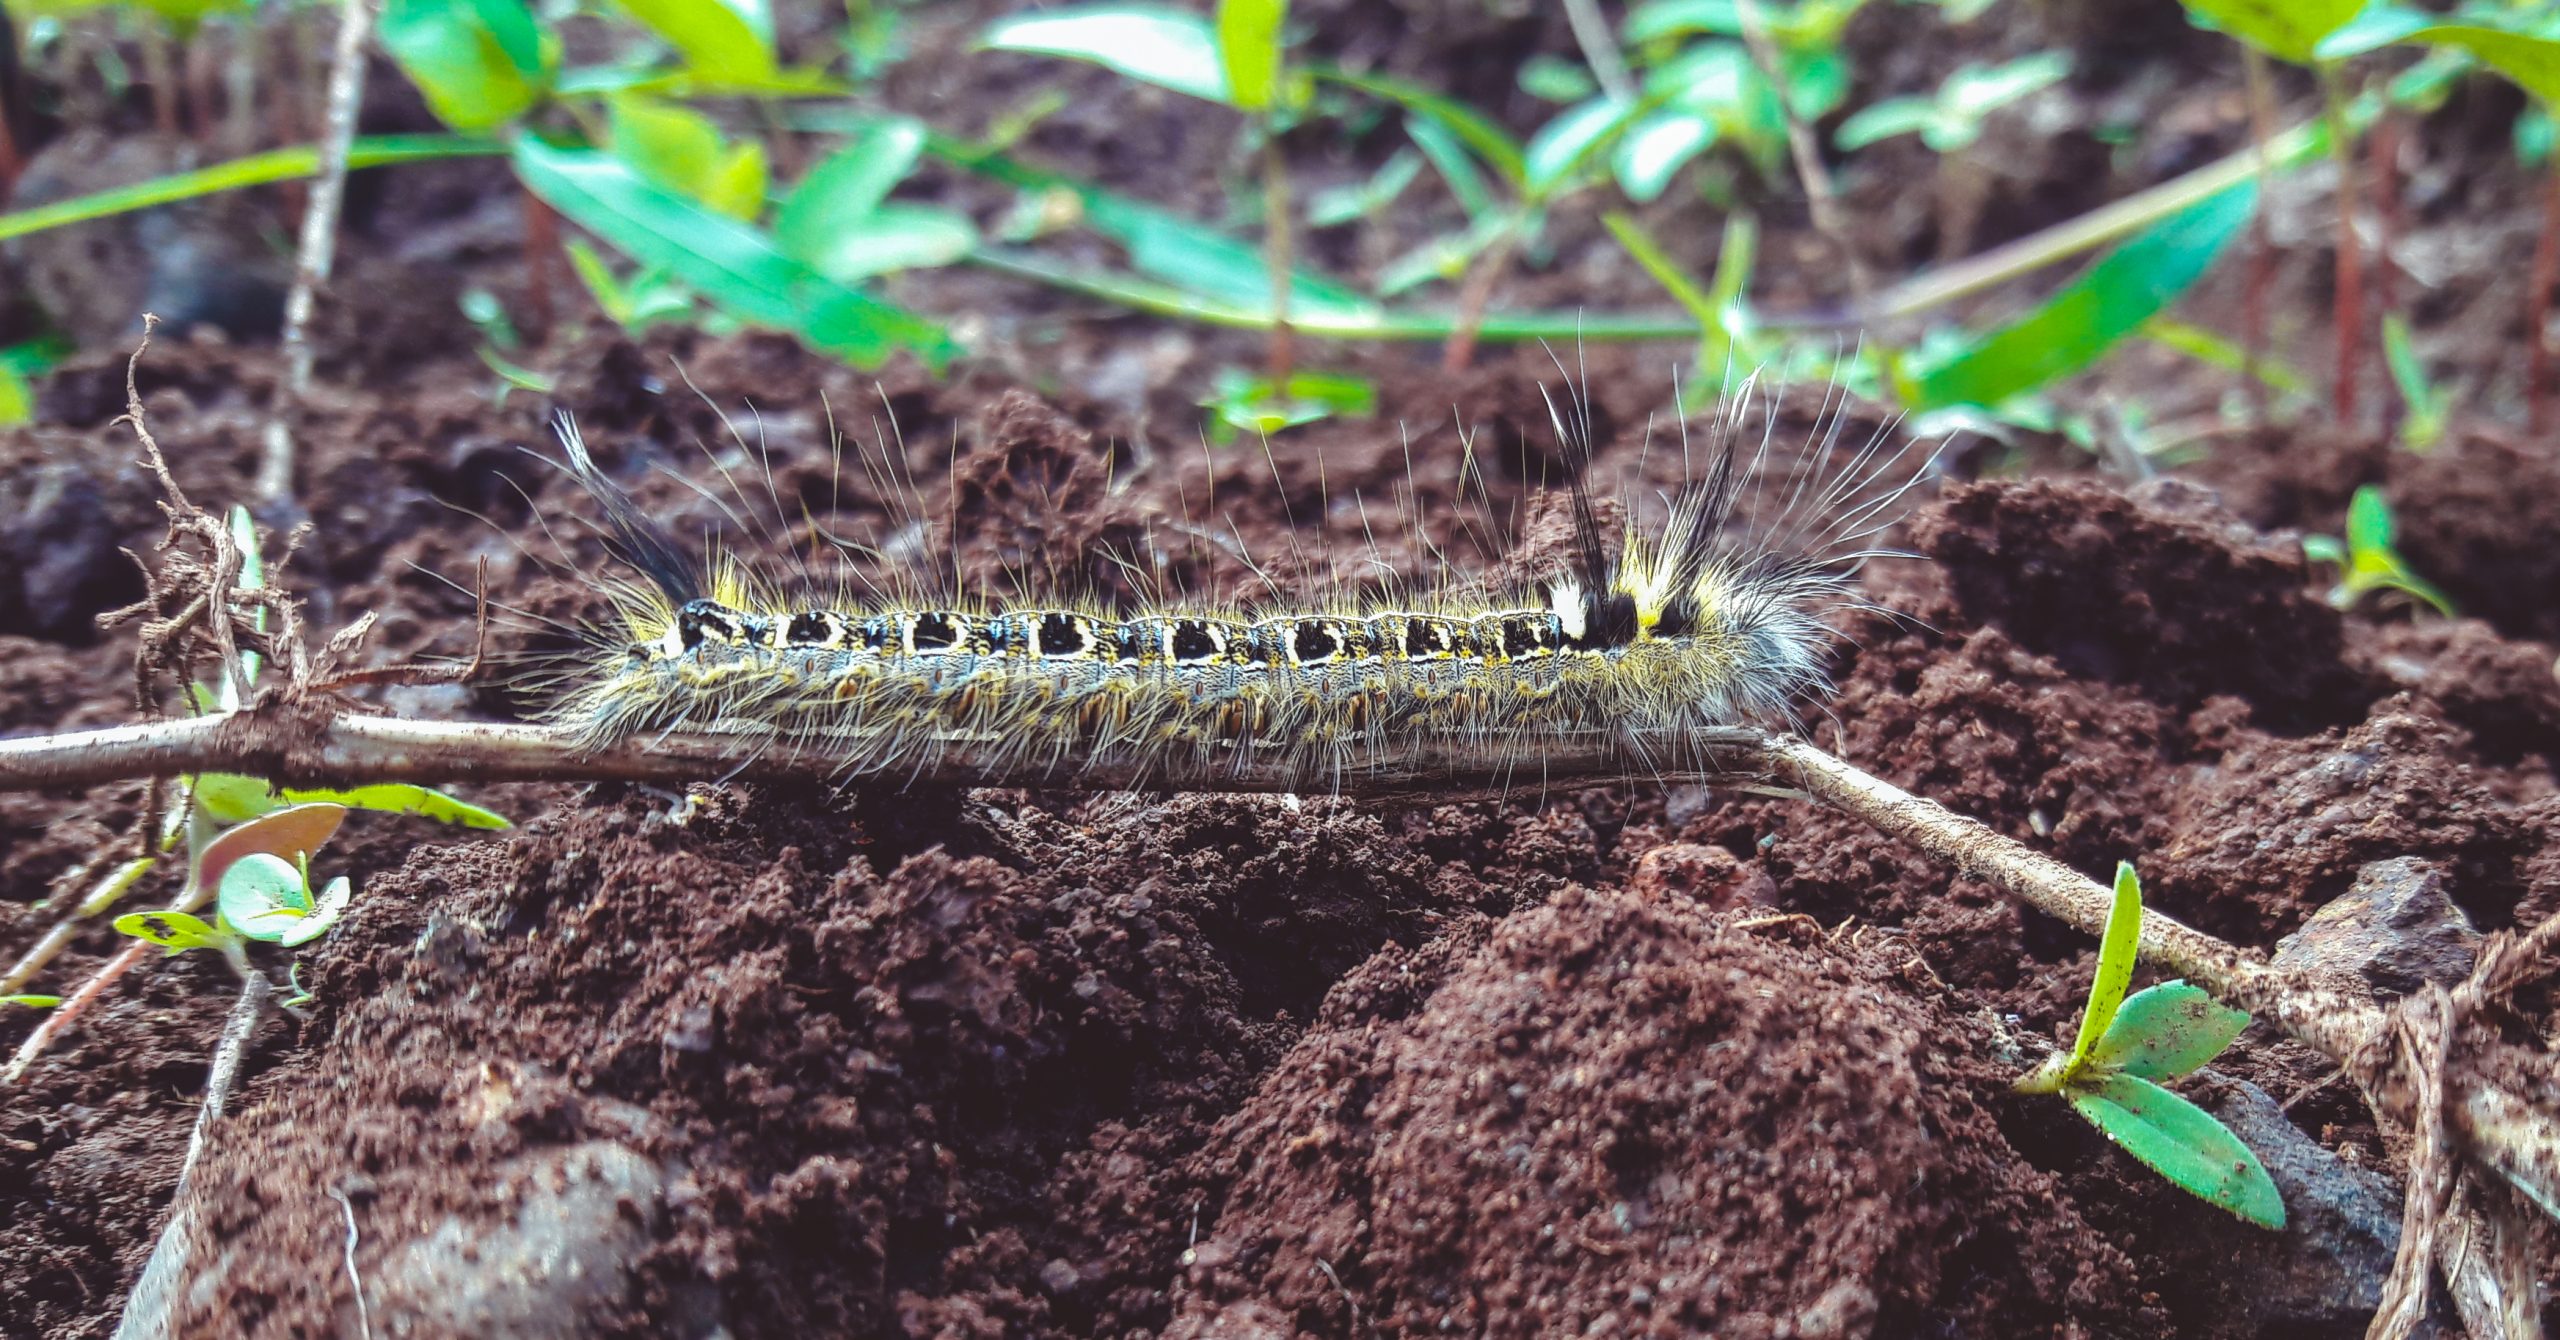 A thorny caterpillar